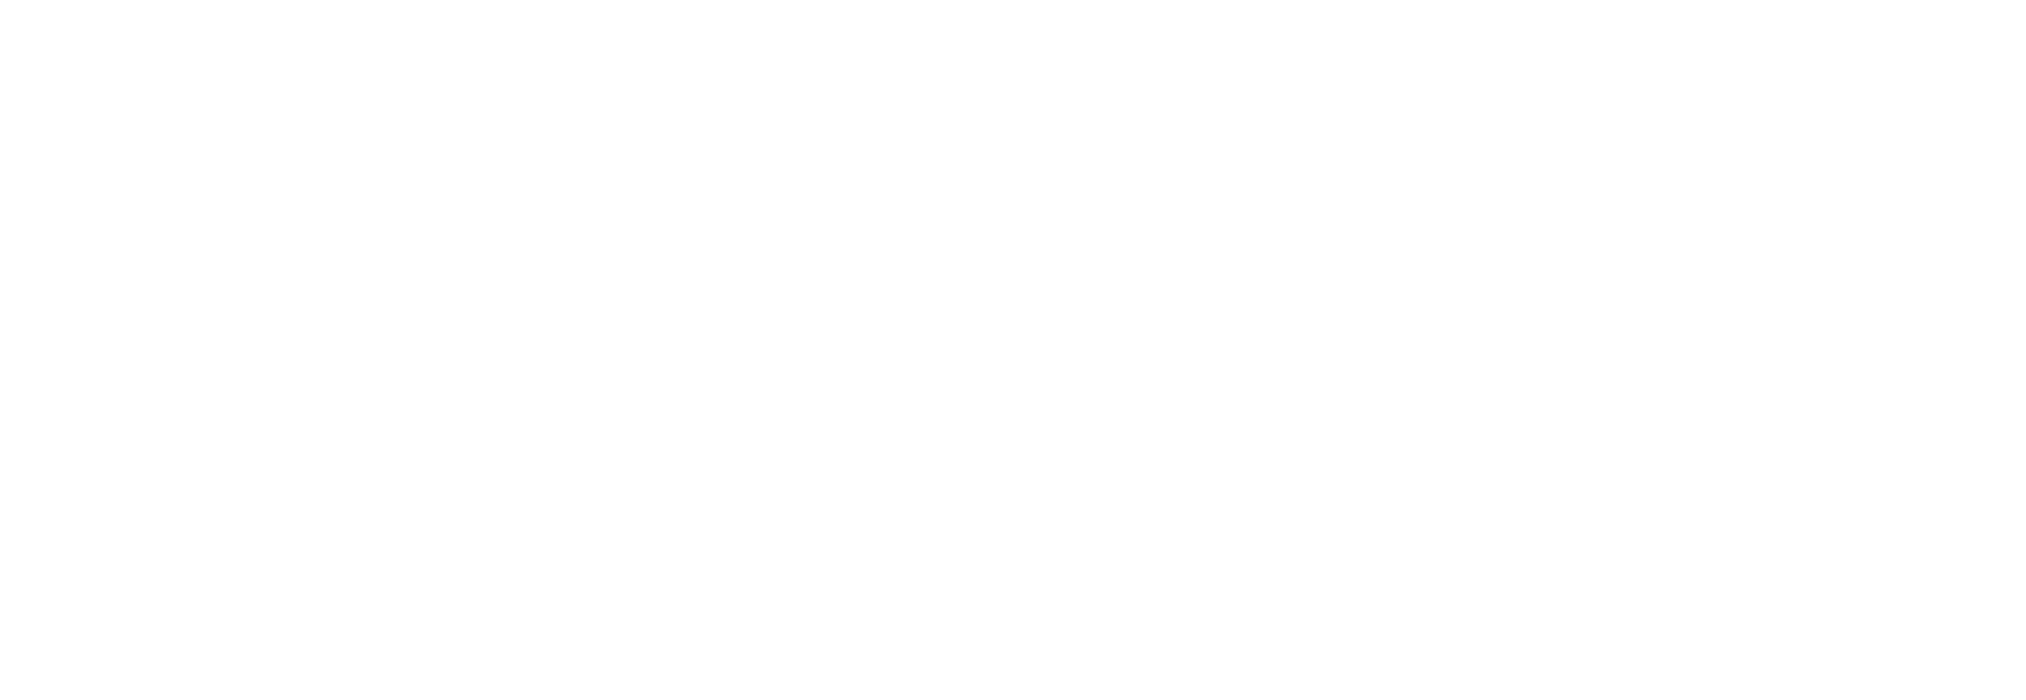 Bonk logo bianco